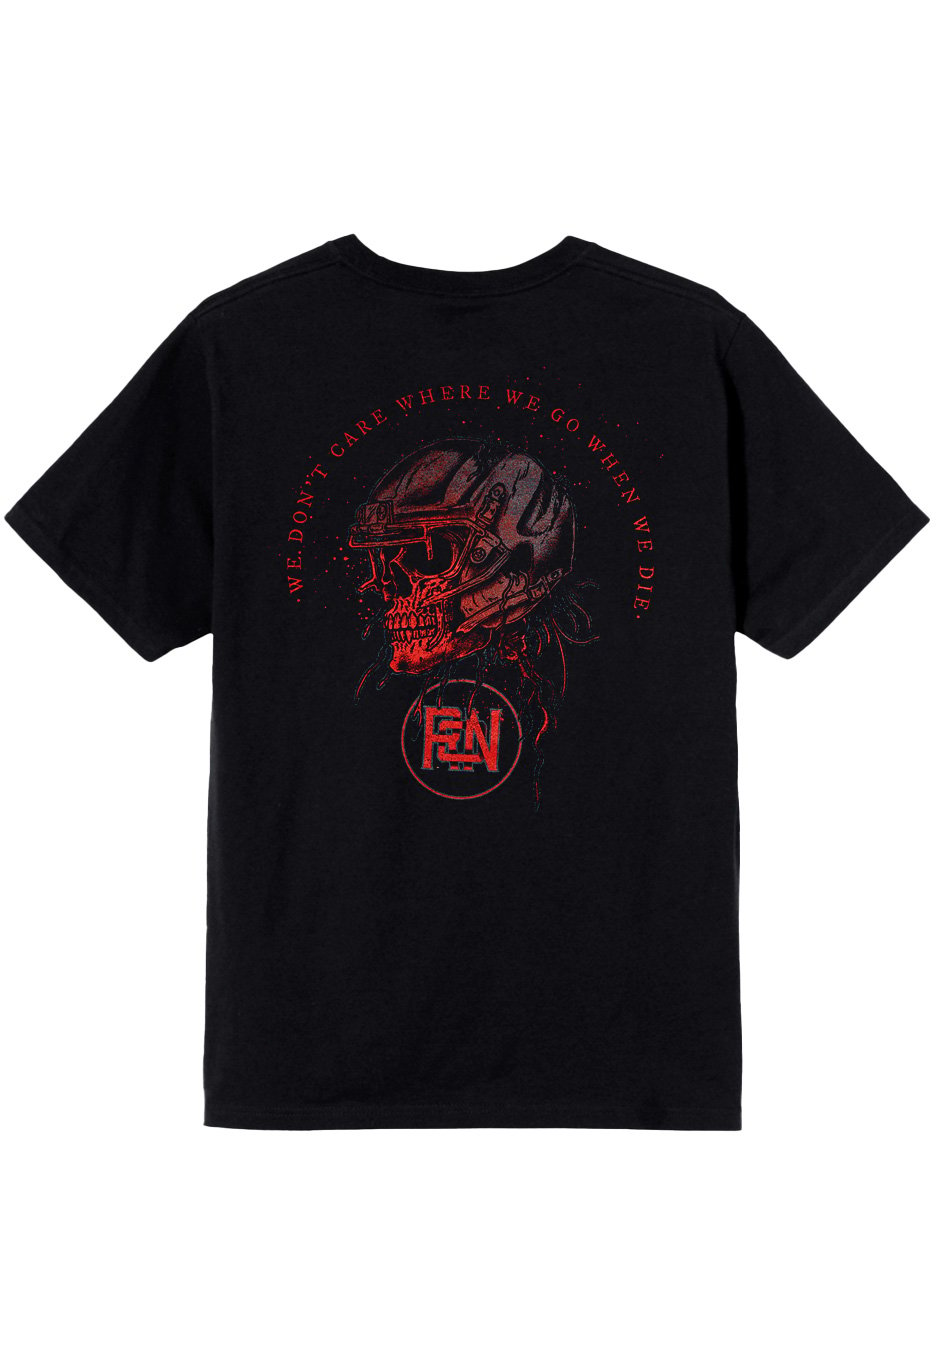 Rivers Of Nihil - Hellbirds - T-Shirt